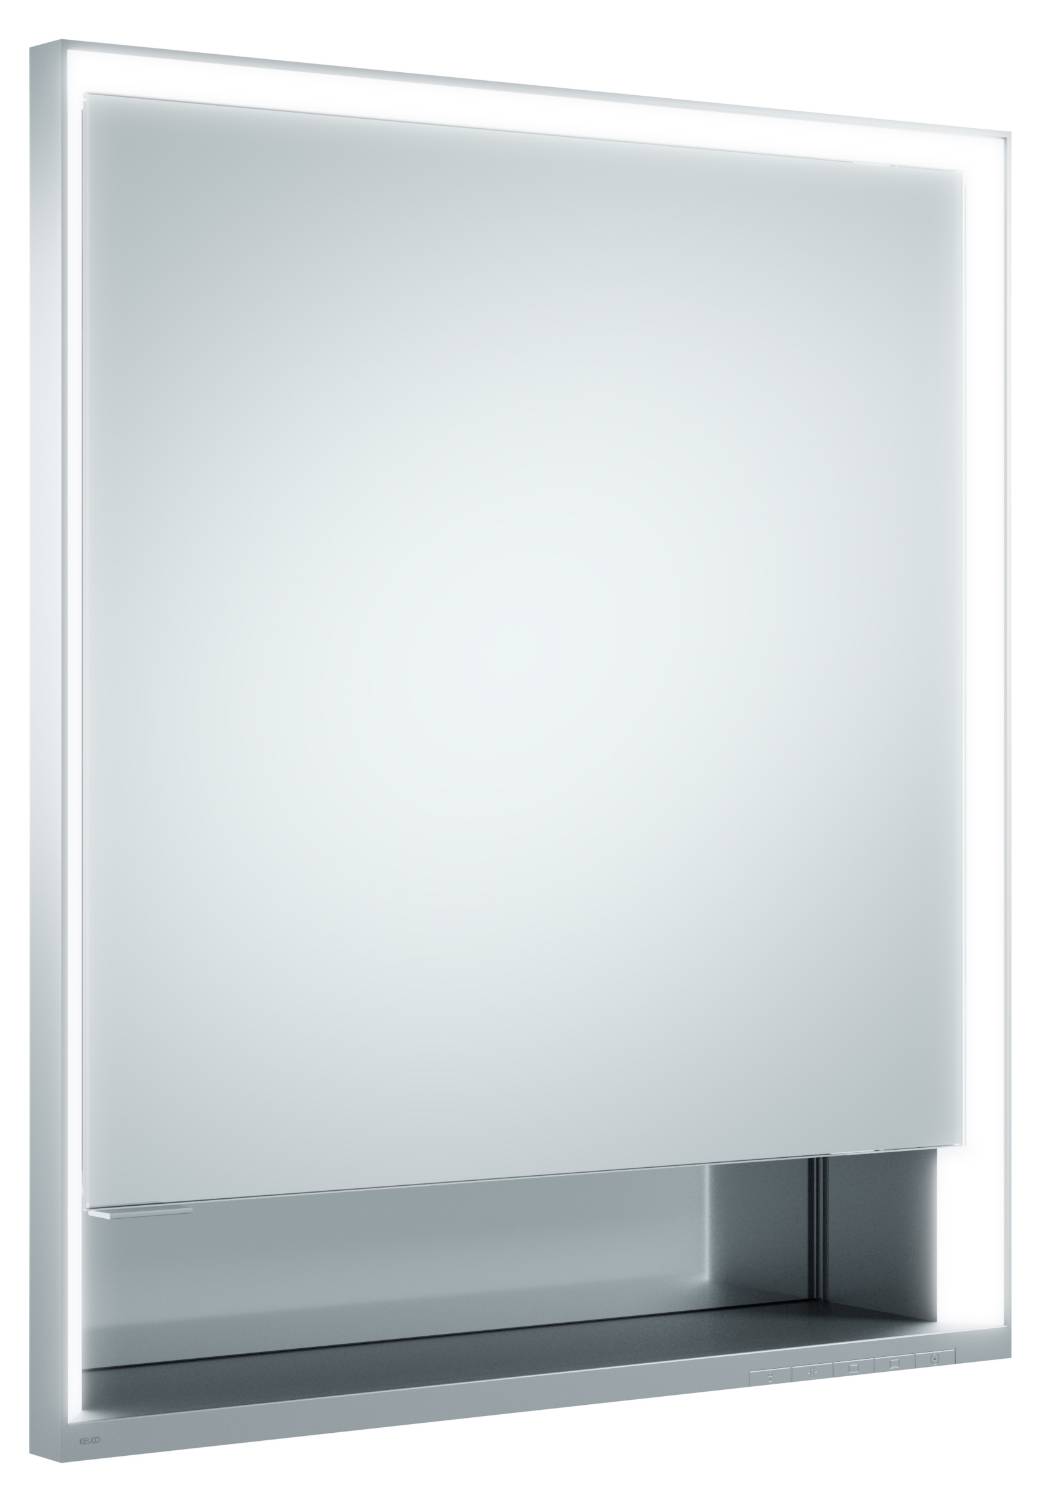 Bathroom Mirror Cabinet - (1 Door) with Lighting - Recessed & Wall Mounted options - ROYAL LUMOS - Mirror cabinet